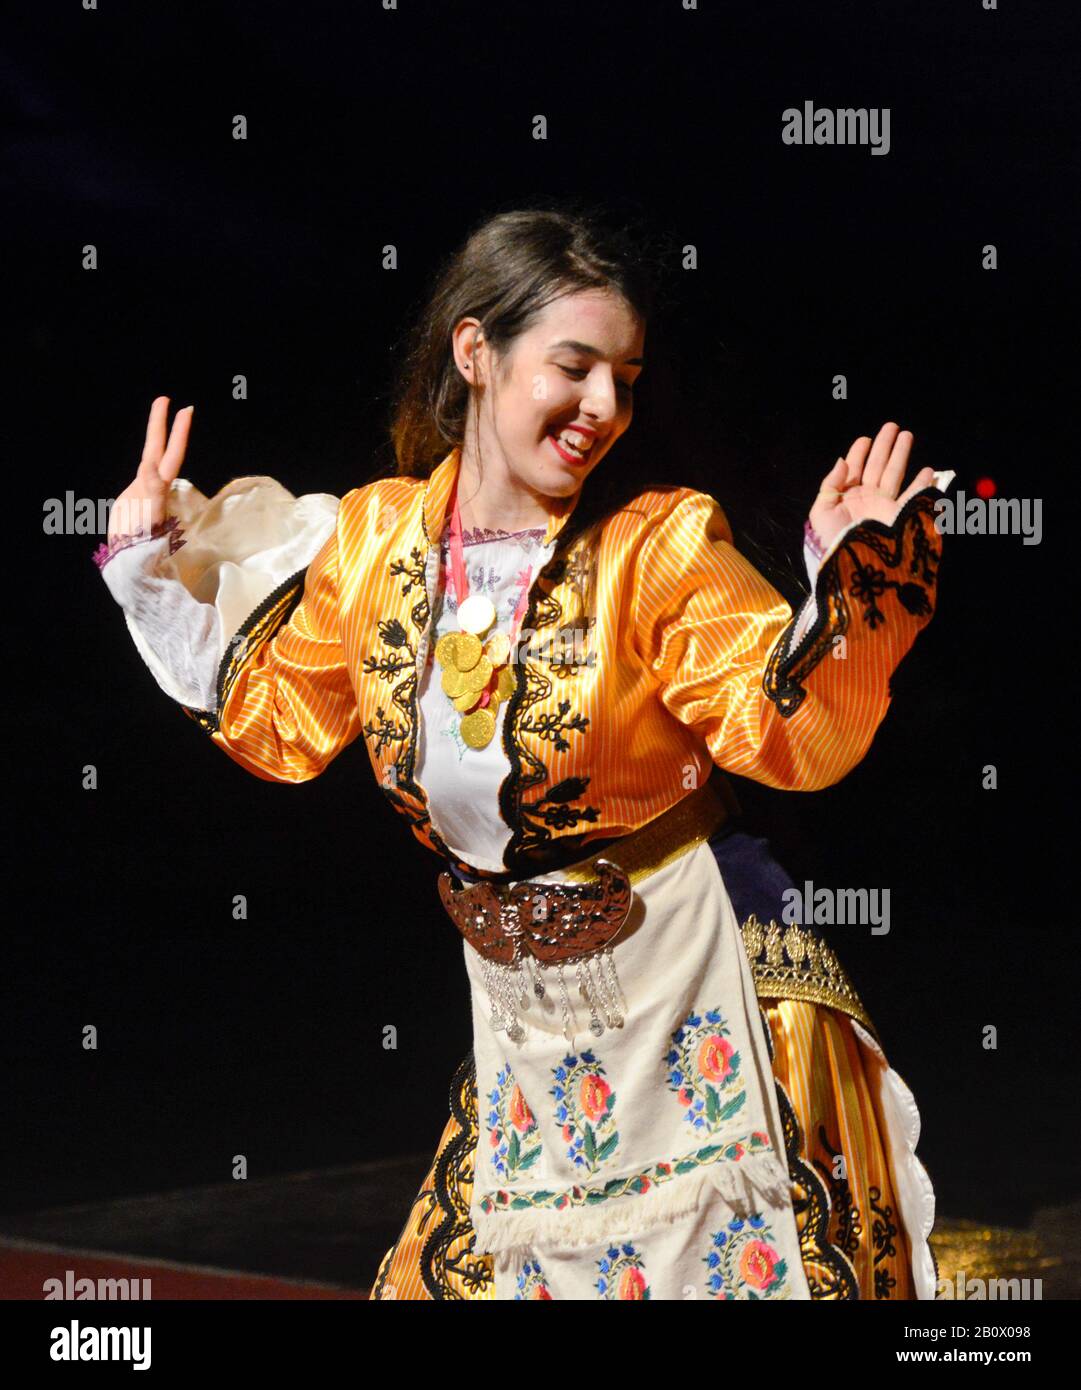 Albanian folk dancer with traditional costume, celebrating Ramadan in Skopje, Macedonia Stock Photo